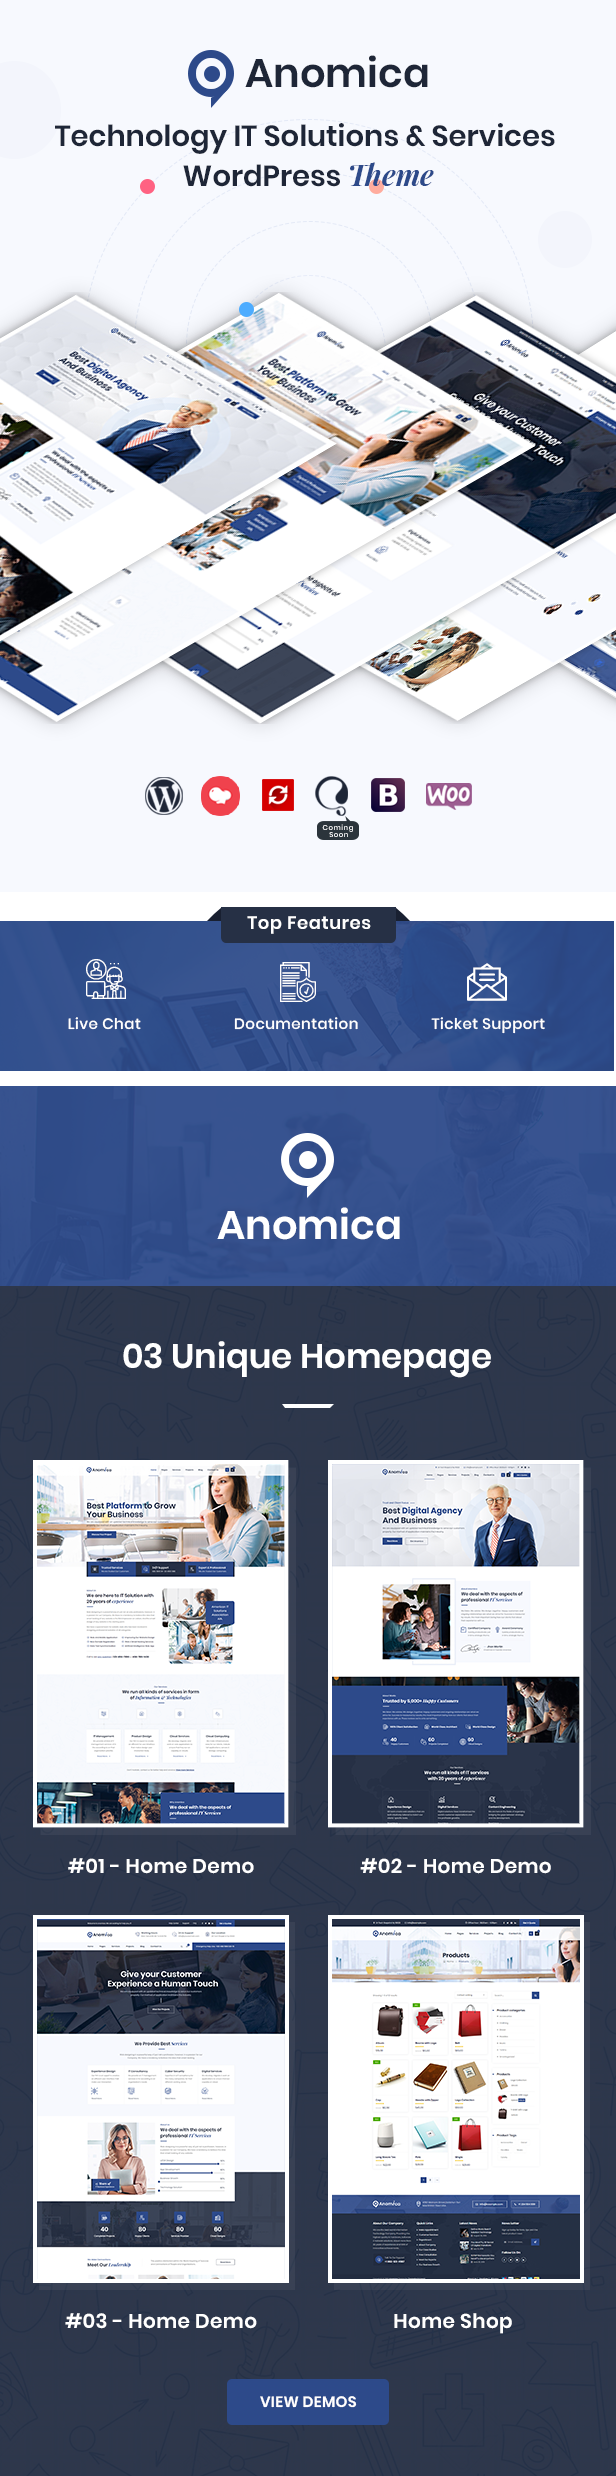 Anomica WordPress Theme